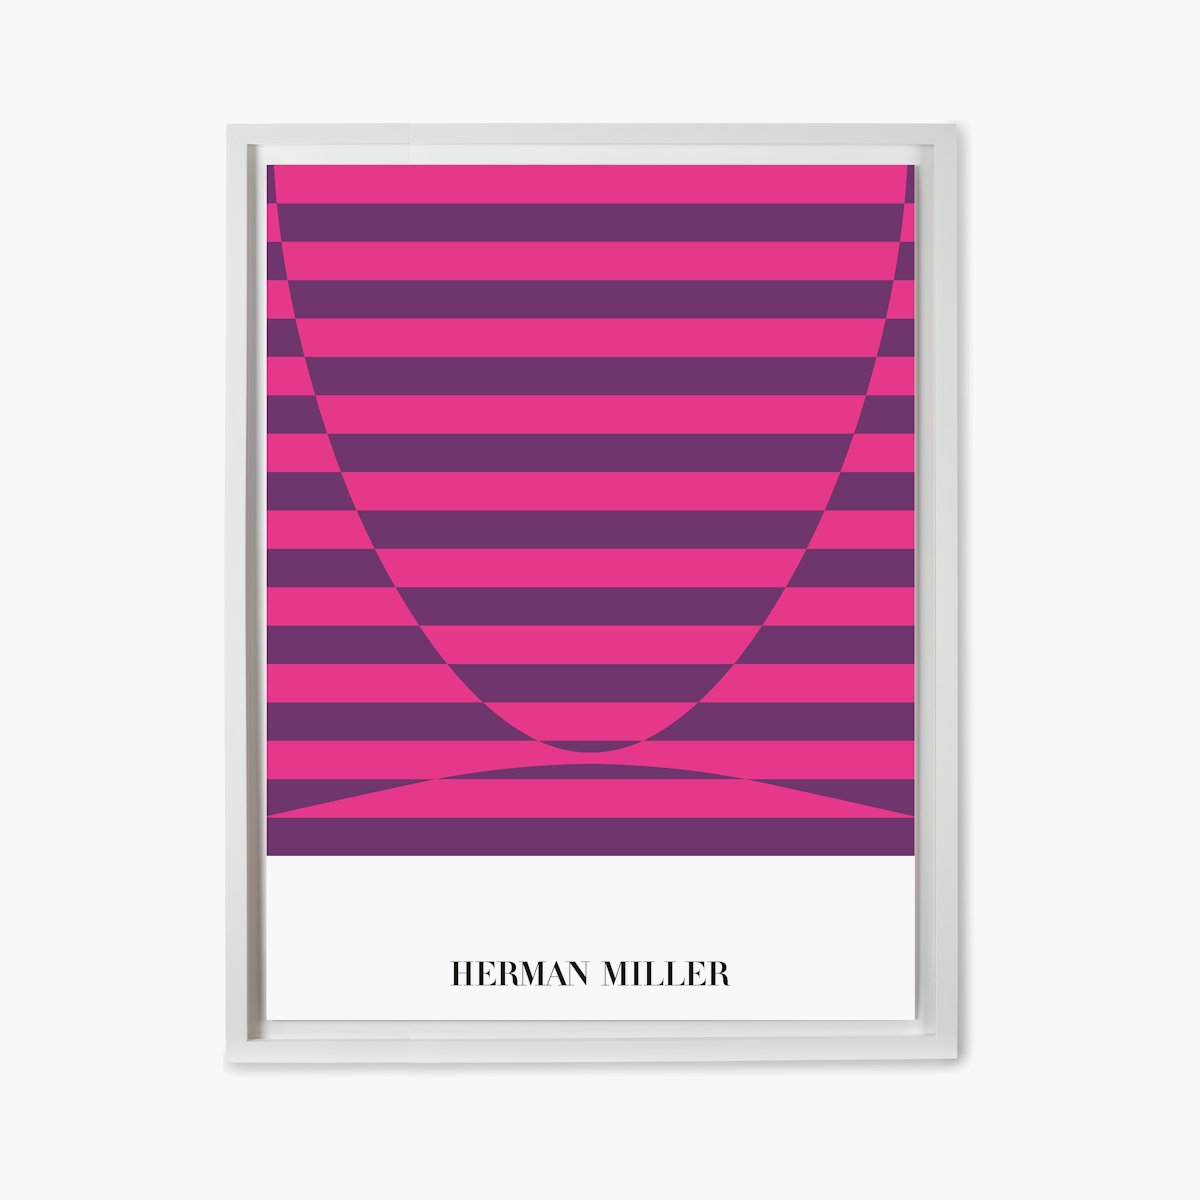 Herman Miller Brochure Covers Poster